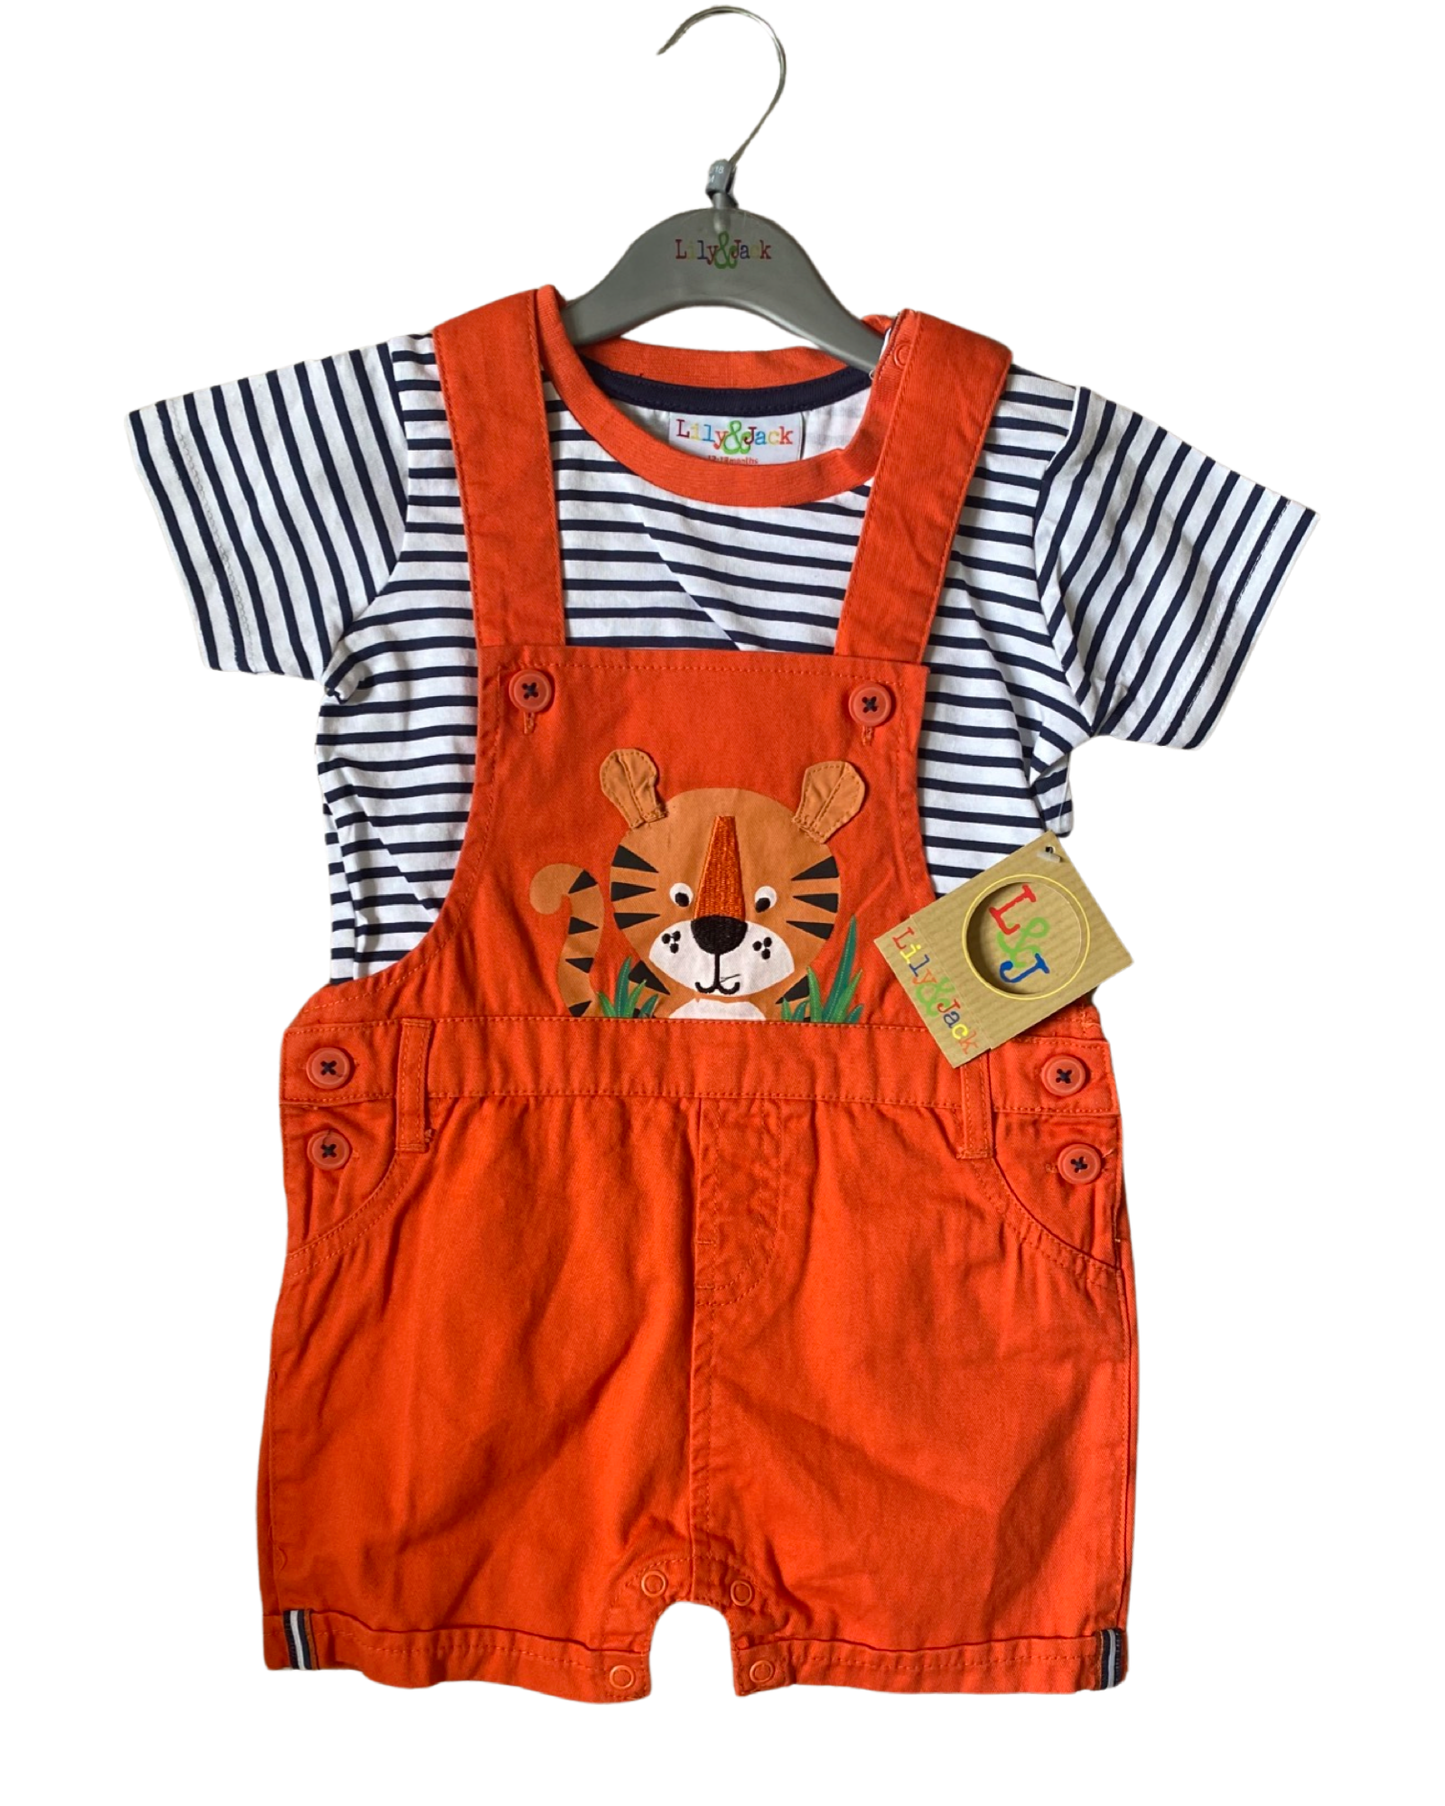 Lily & Jack short tiger dungarees & t shirt set (size 12-18mths)